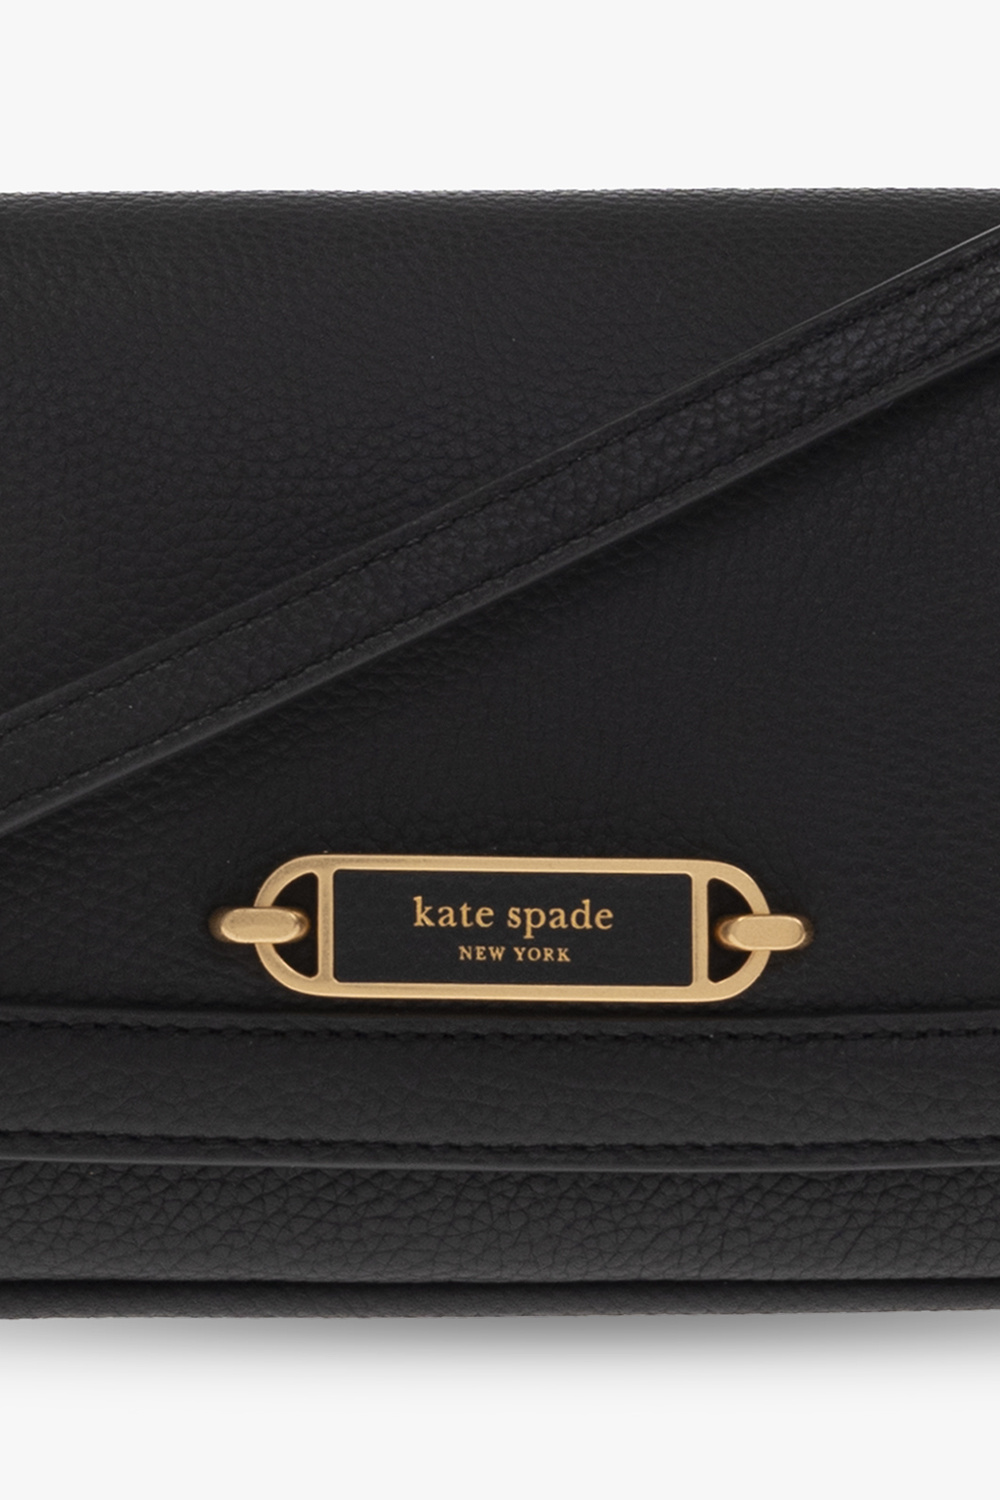 Kate Spade ‘Gramercy Small’ shoulder bag